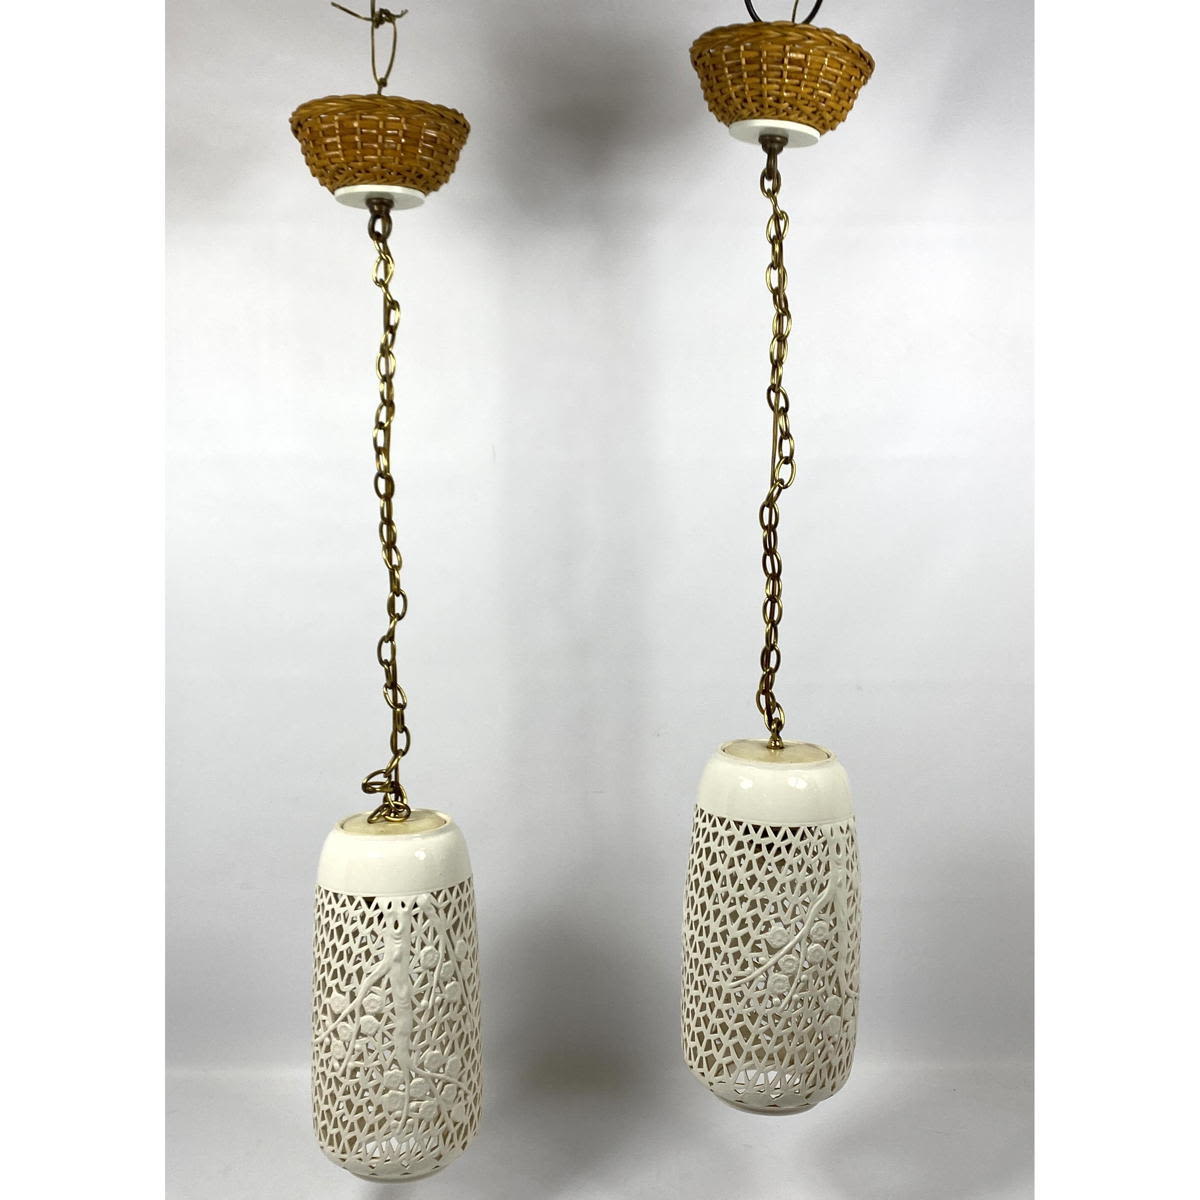 Pair Asian Style Pendant Lamps.